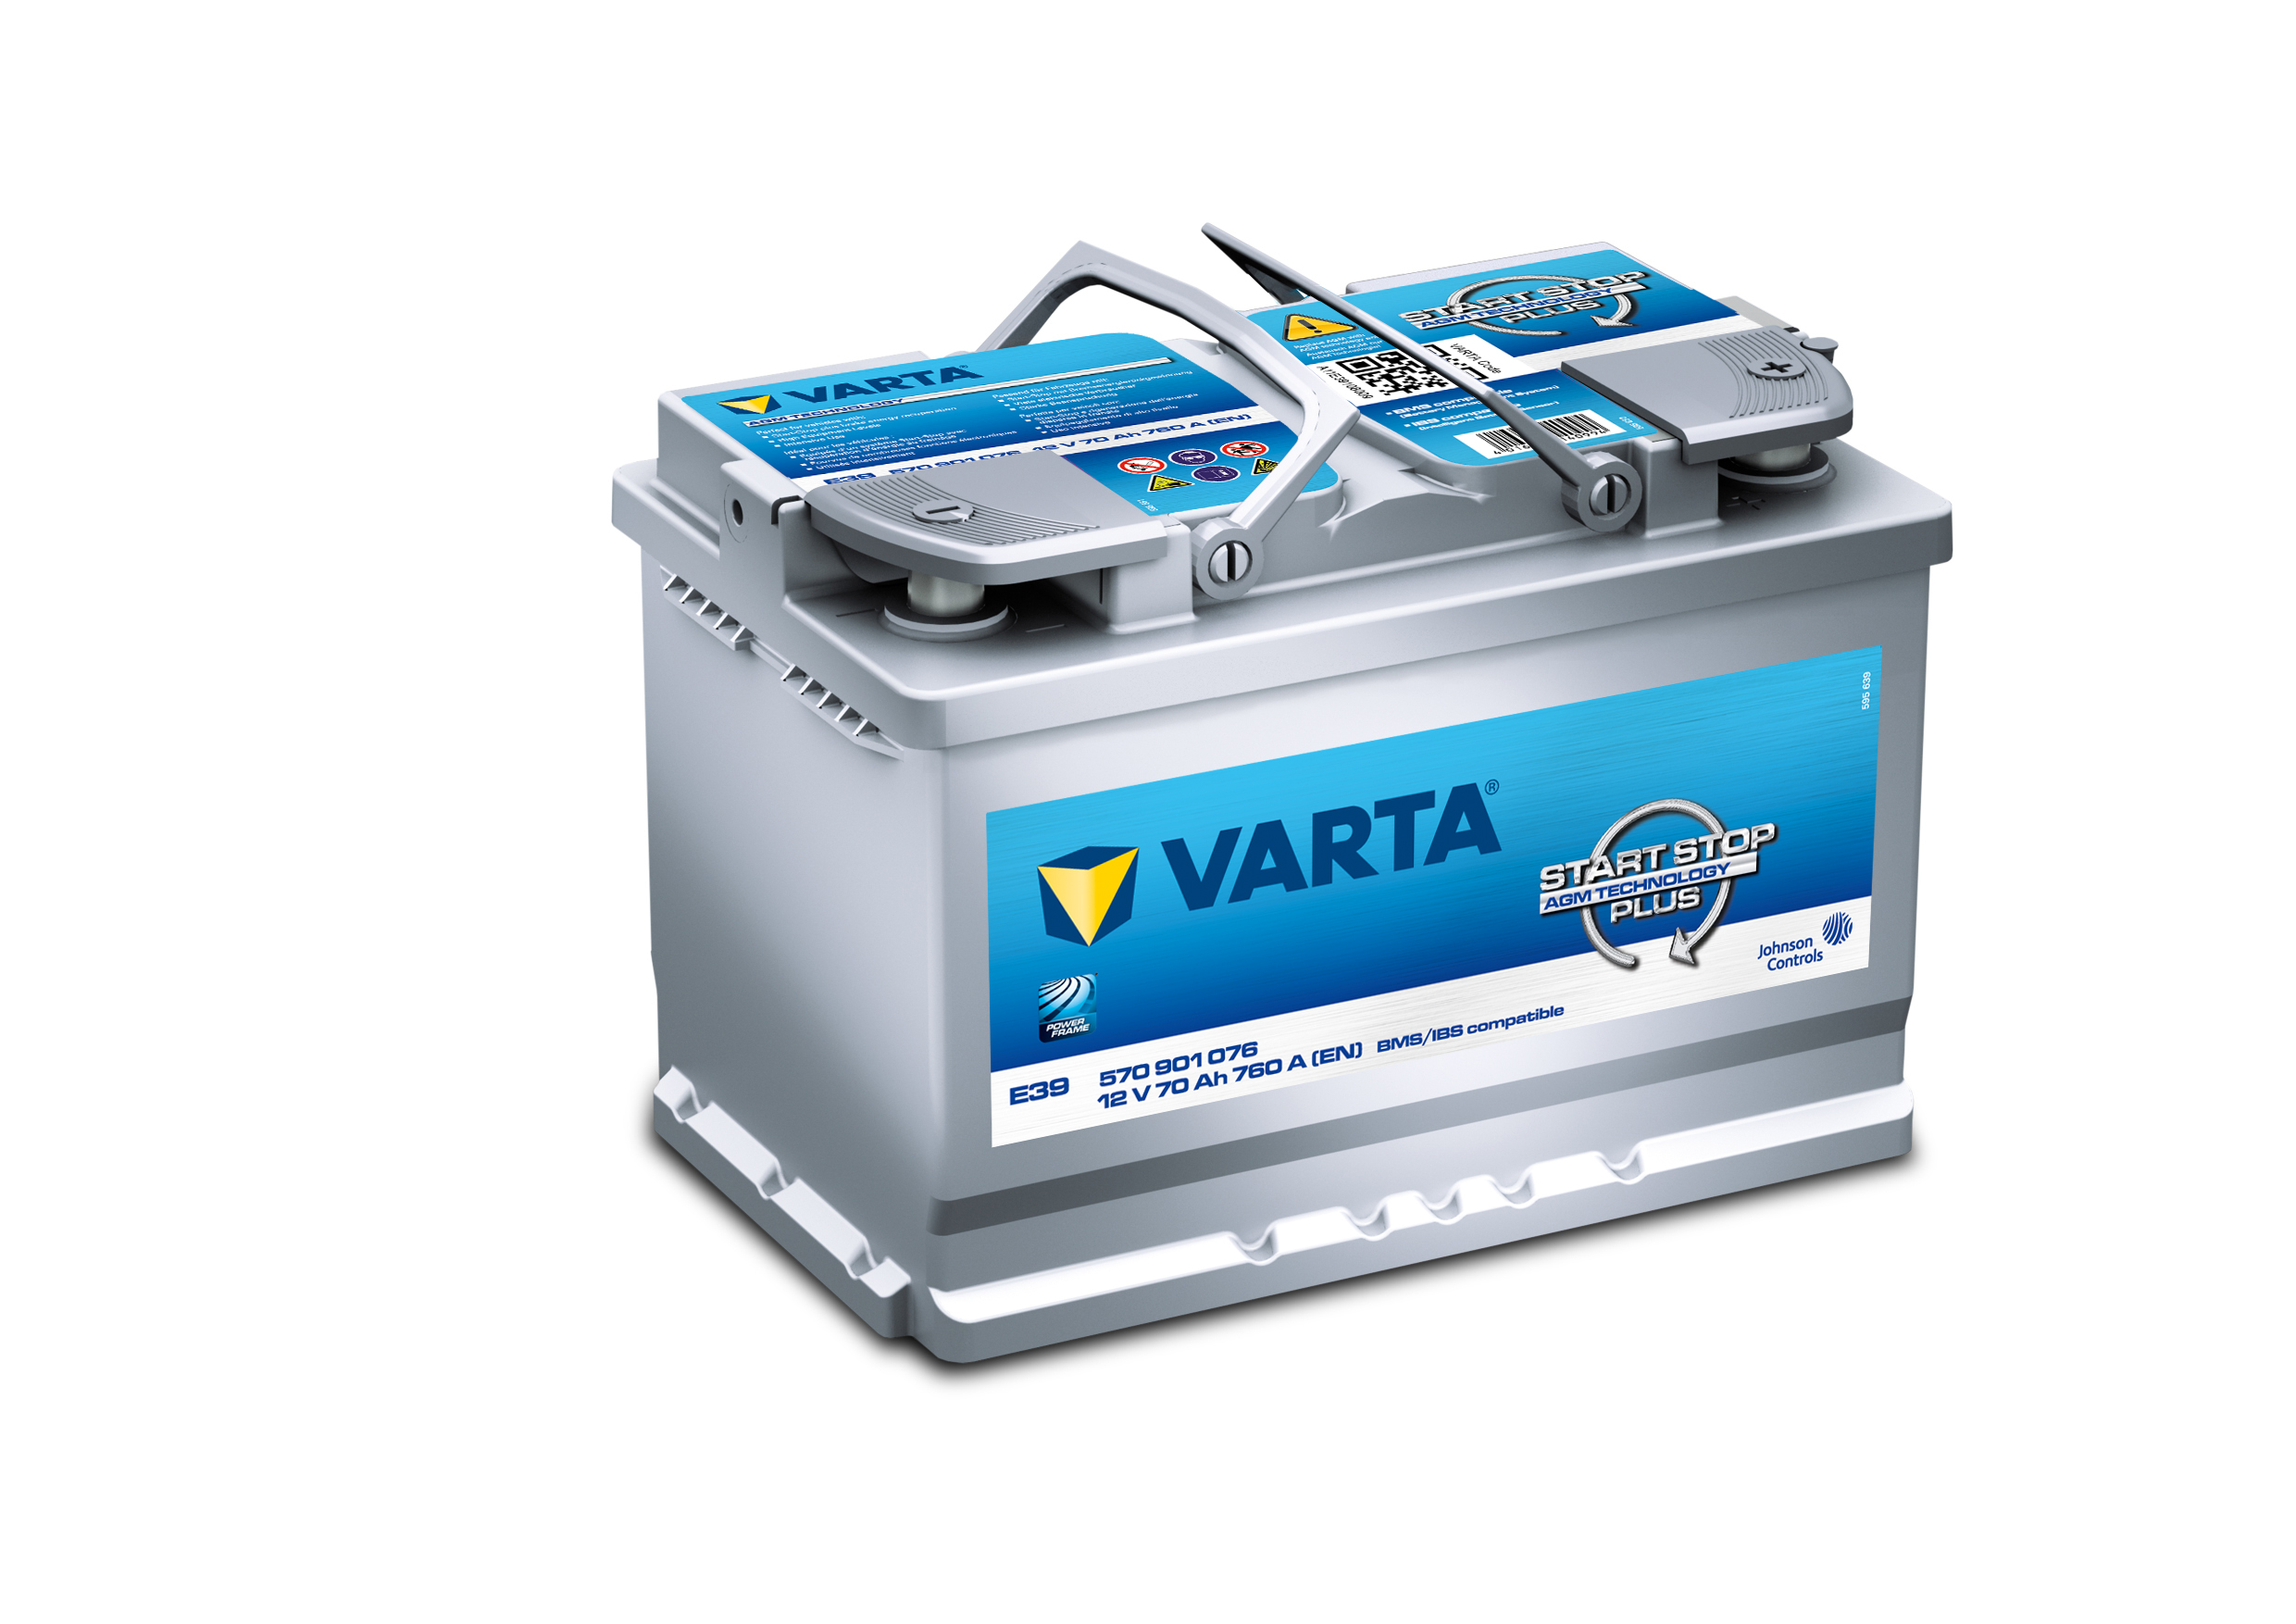 Varta Start-Stop Plus AGM batteri E39 12 V 70 Ah CCA 760 A (EN